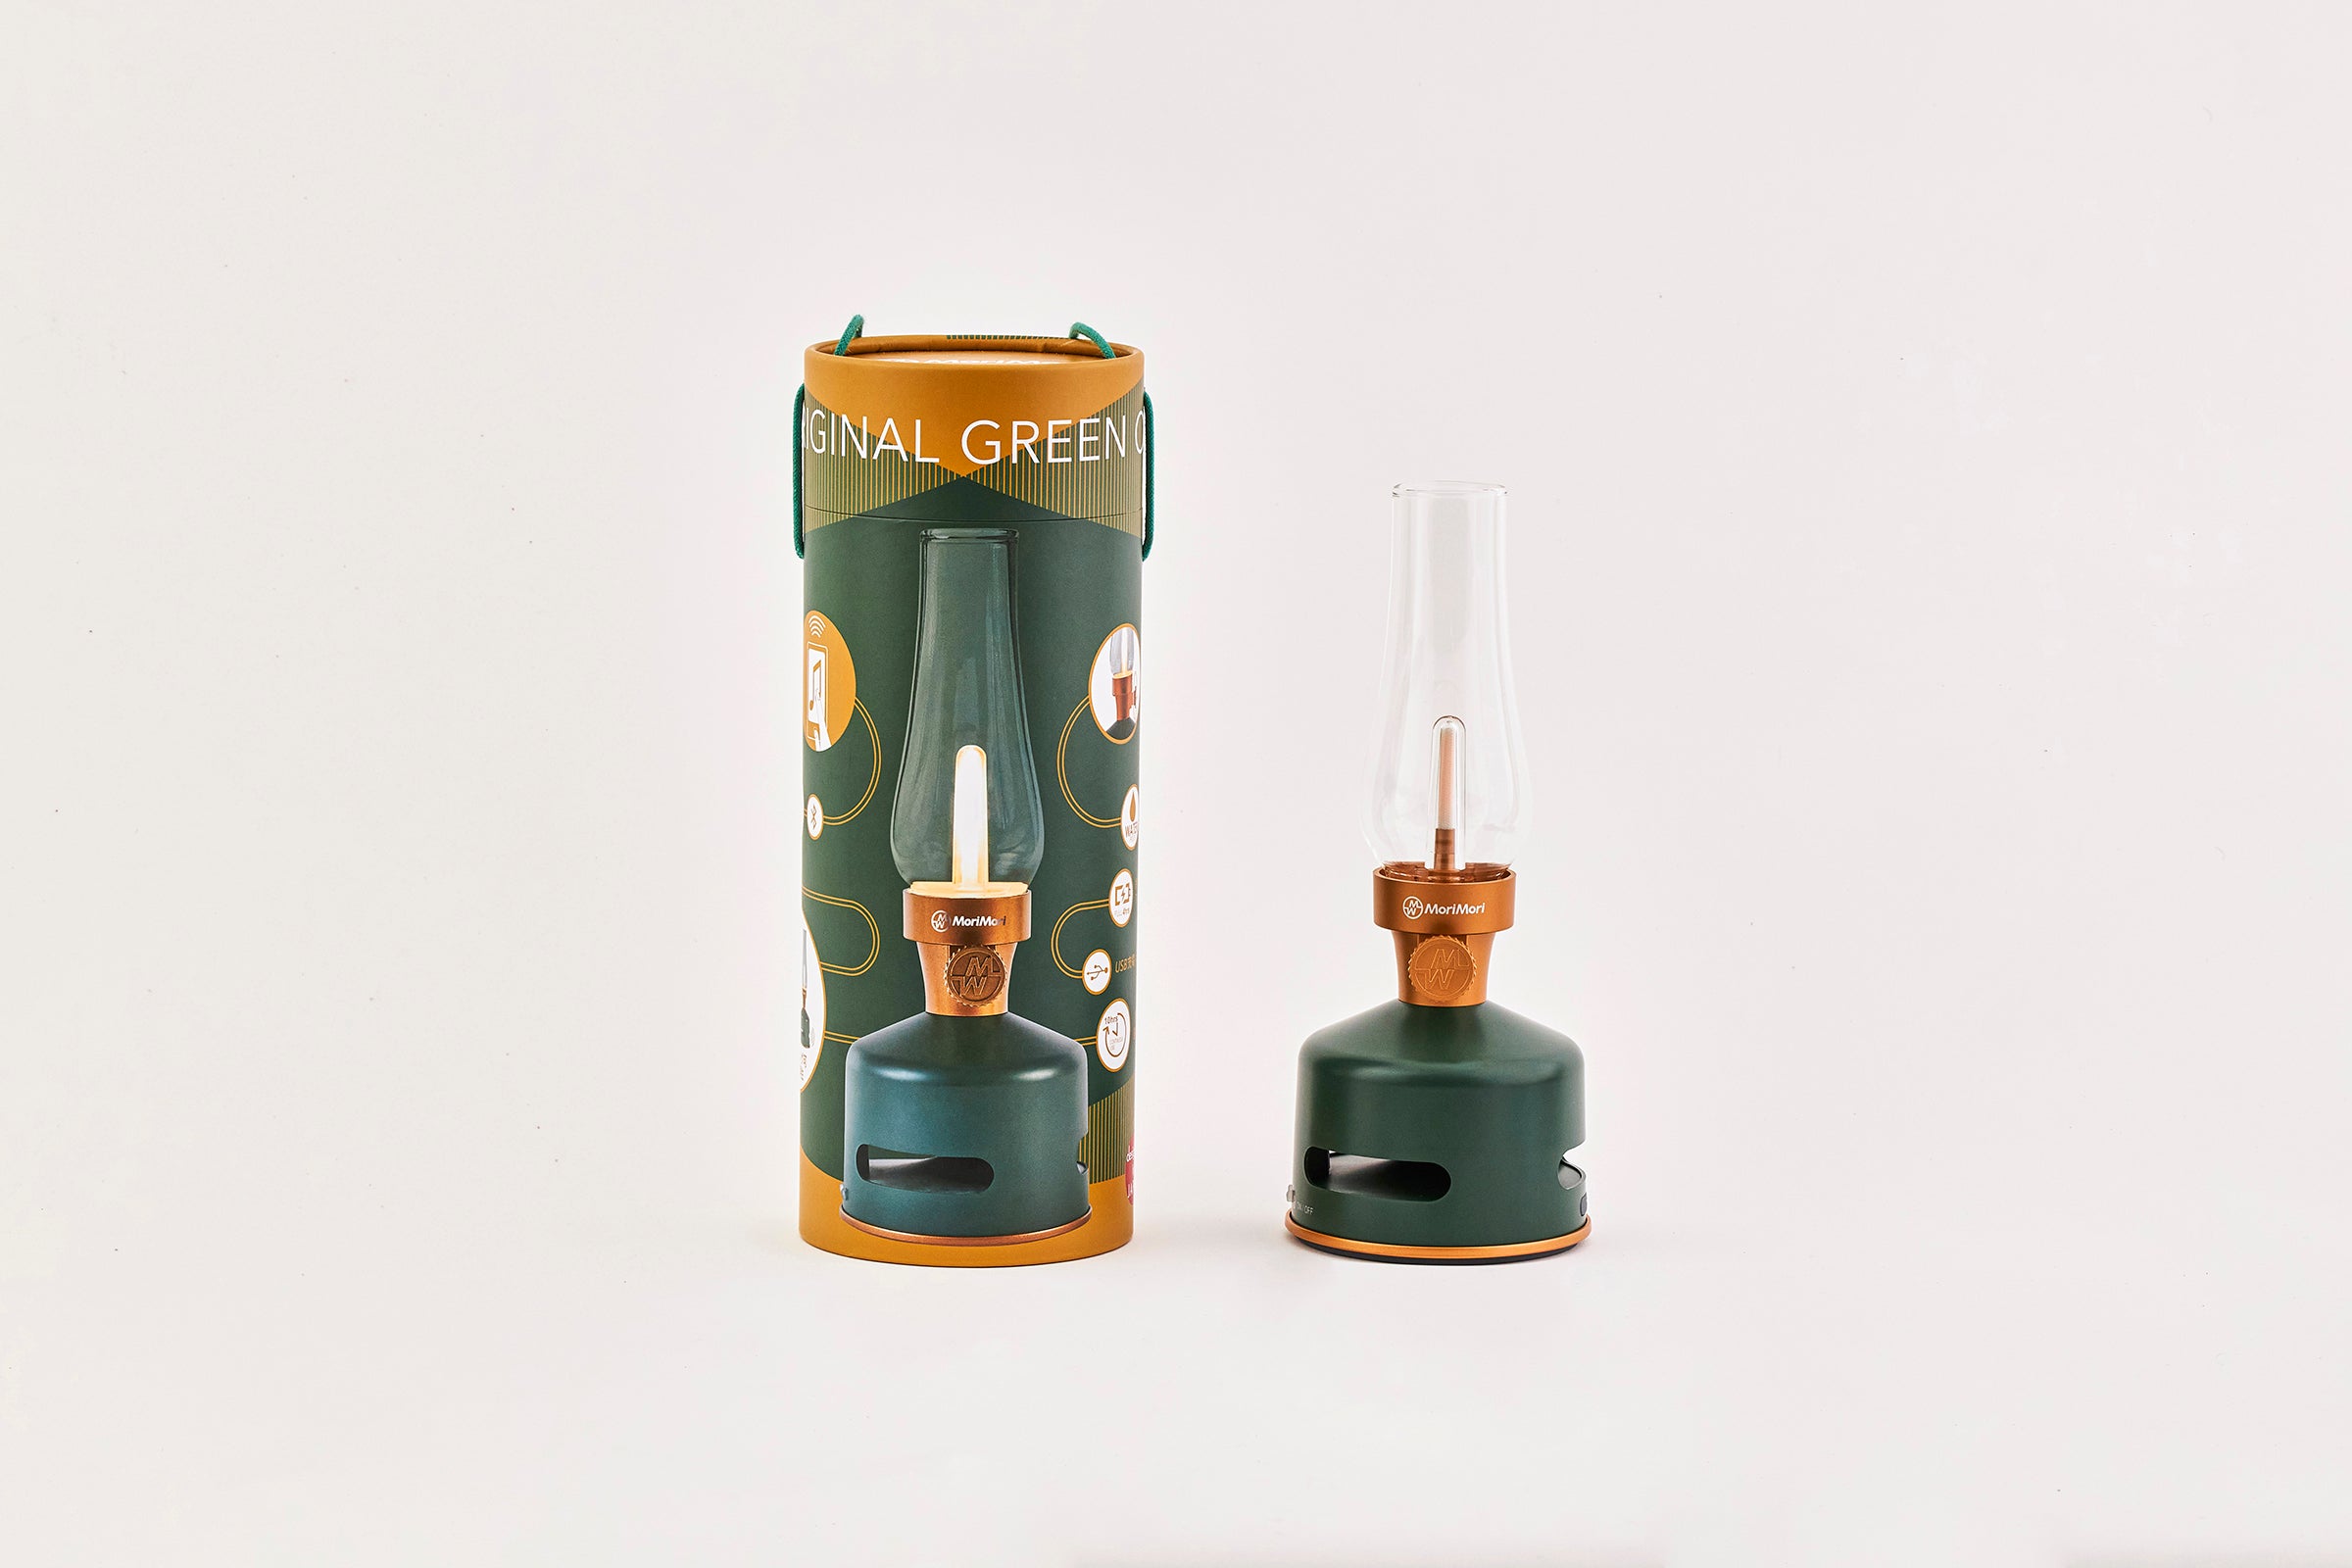 MoriMori （モリモリ）LED Lantern Speaker S　✳︎送料無料